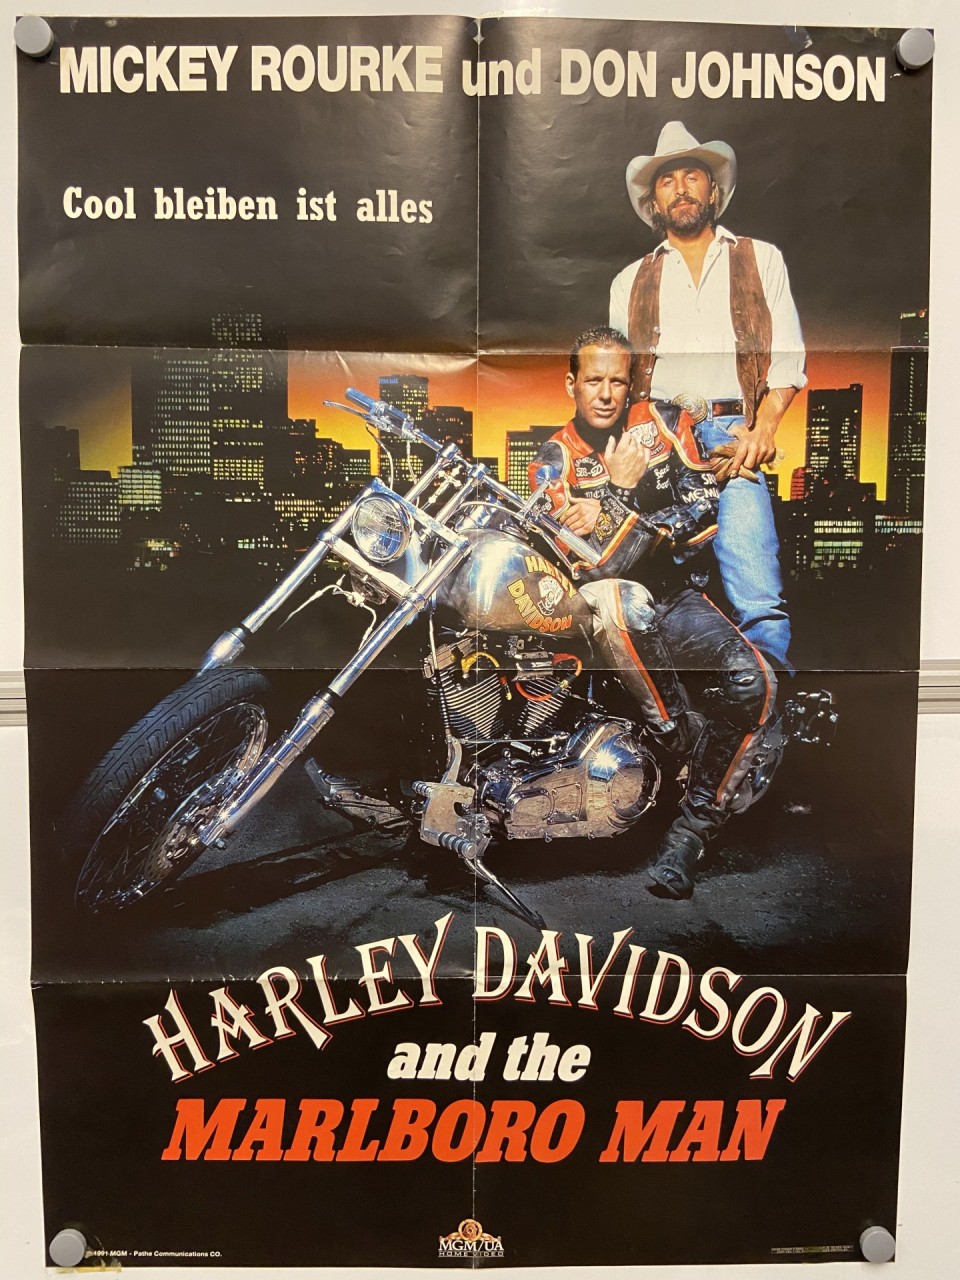 Harley Davidson And The Marlboro Man Poster Betamax Video 2000 Poster Shirts Bucher Film Retro Shop De